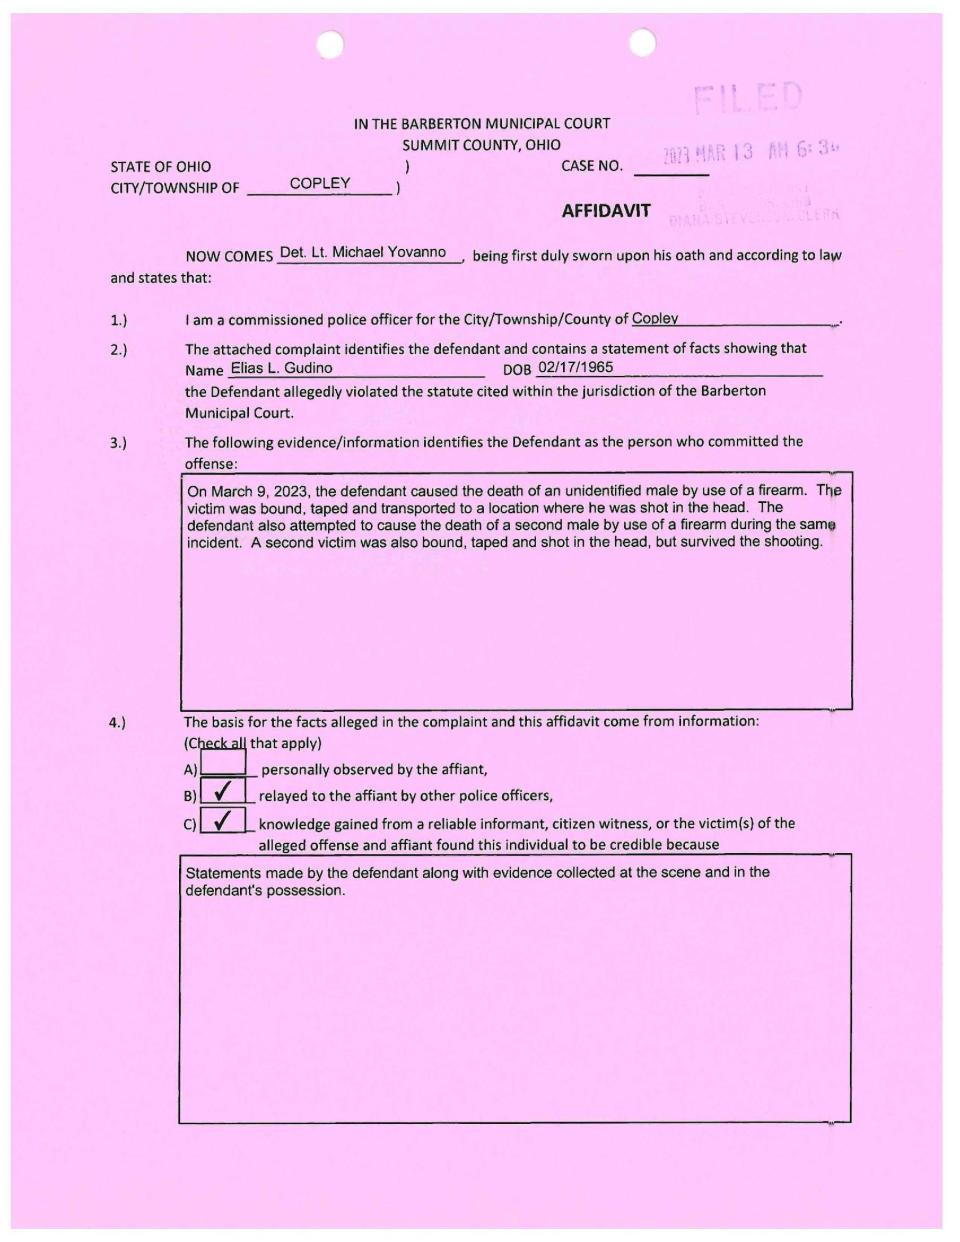 Barberton Municipal Court records related to the Elias Gudino case.